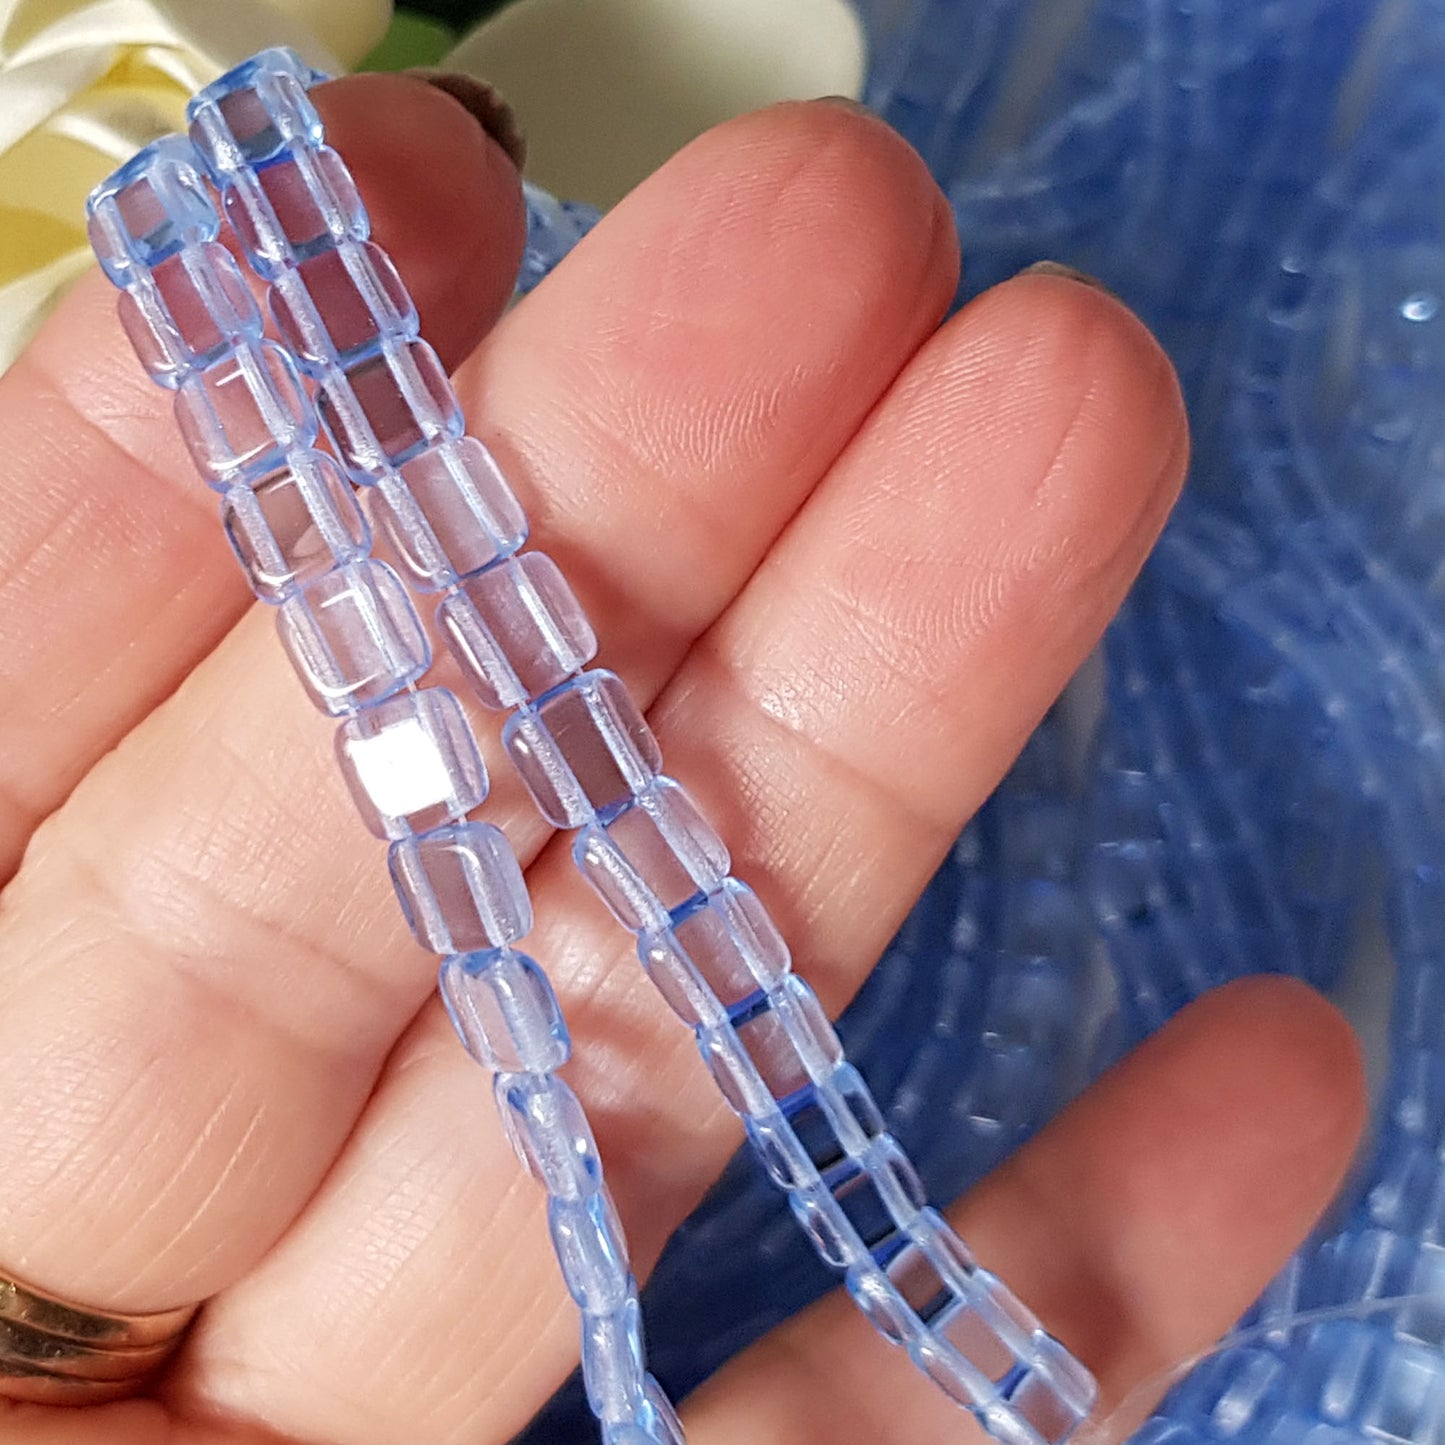 Tile Lt Sapphire Transparent 6mm CzechMate Beads | CZMTile-3002 | Beading Supply